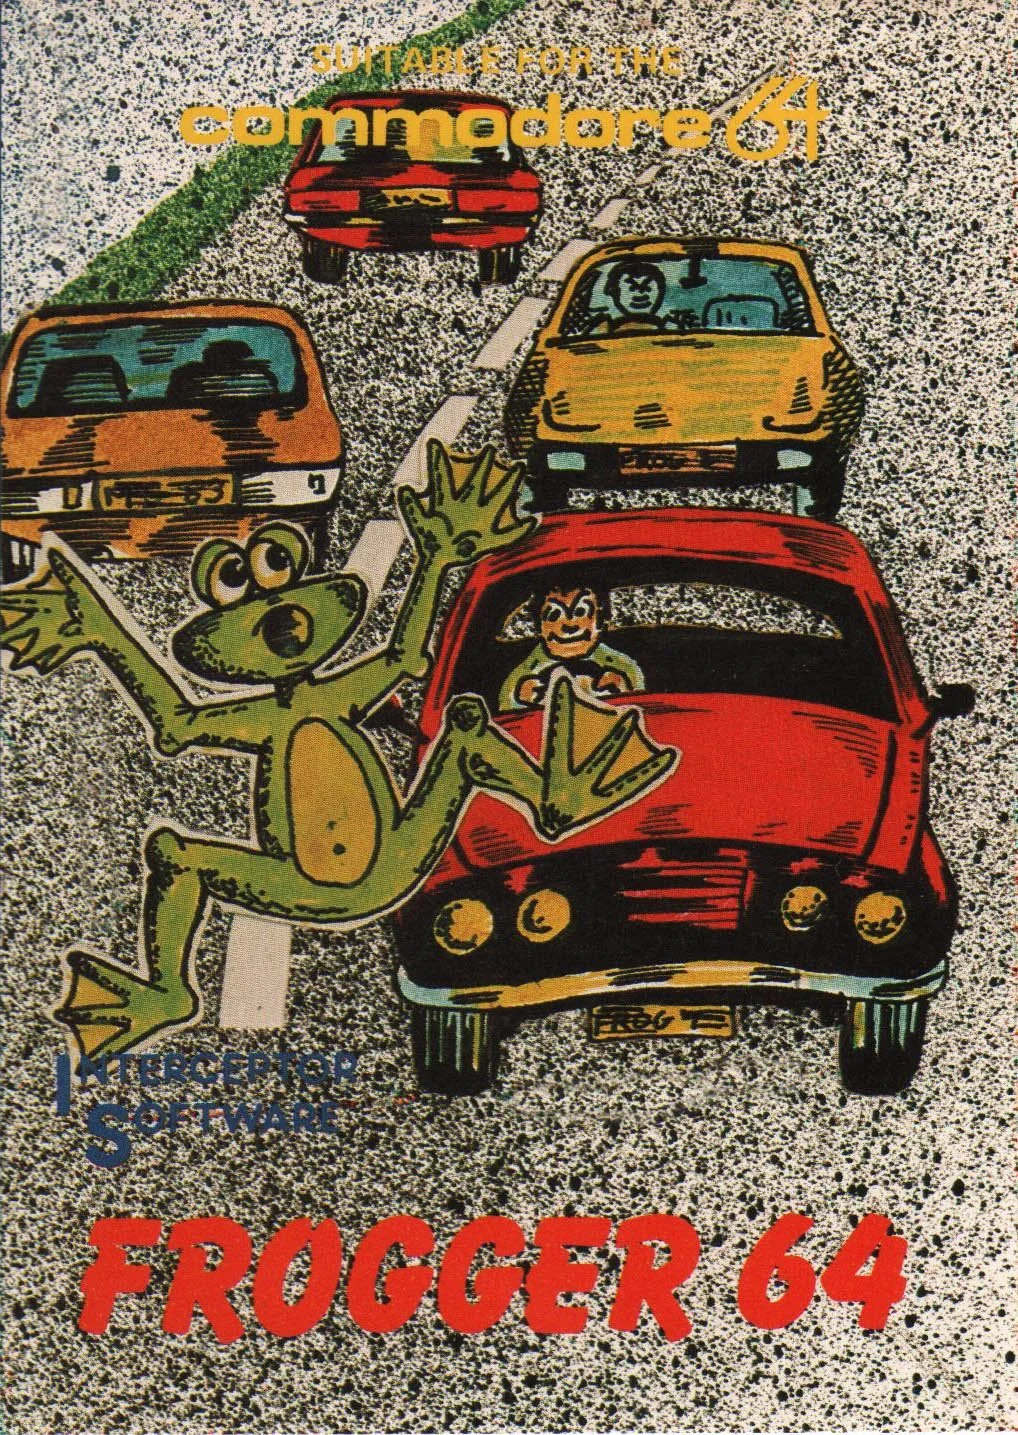 Frogger 64